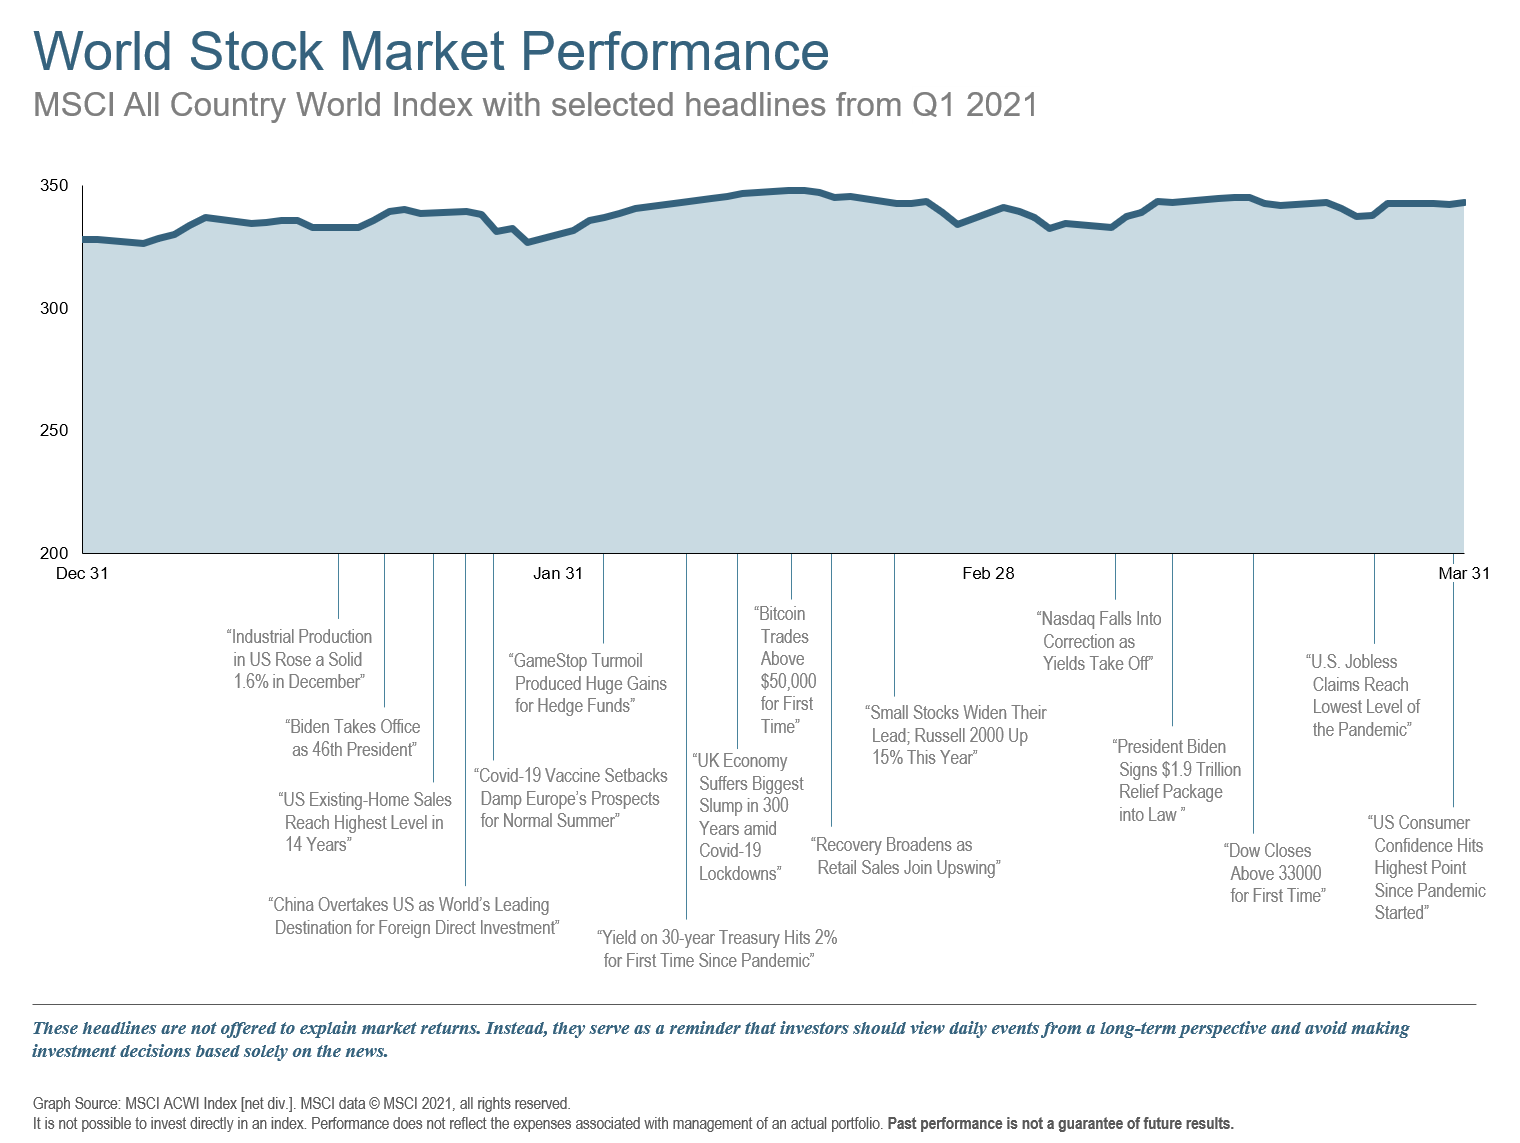 Q1 2021 World Stock Market Performance.png